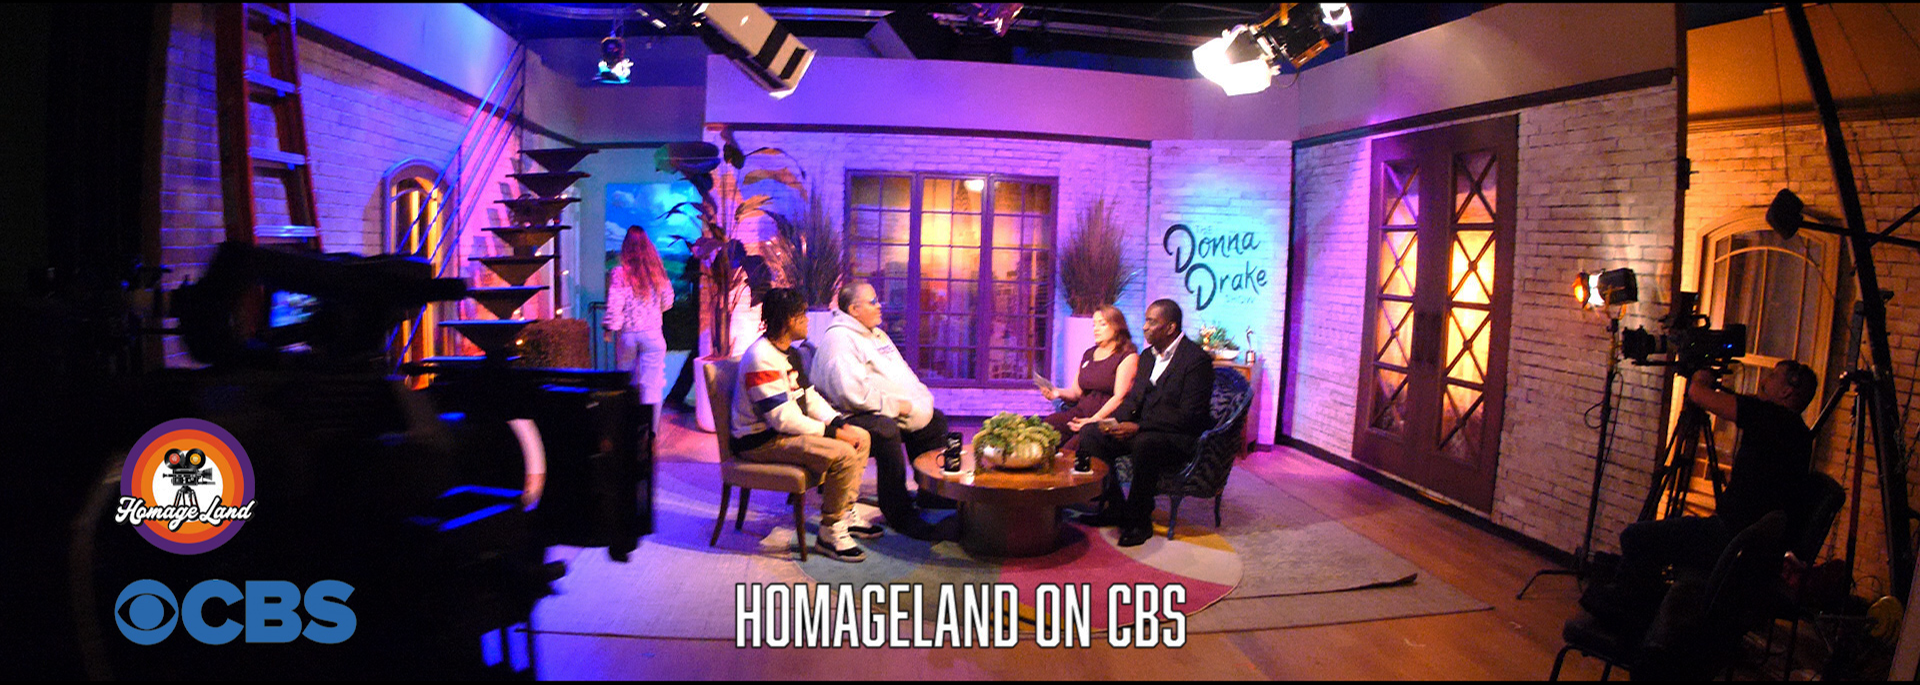 HOMAGELAND ON CBS